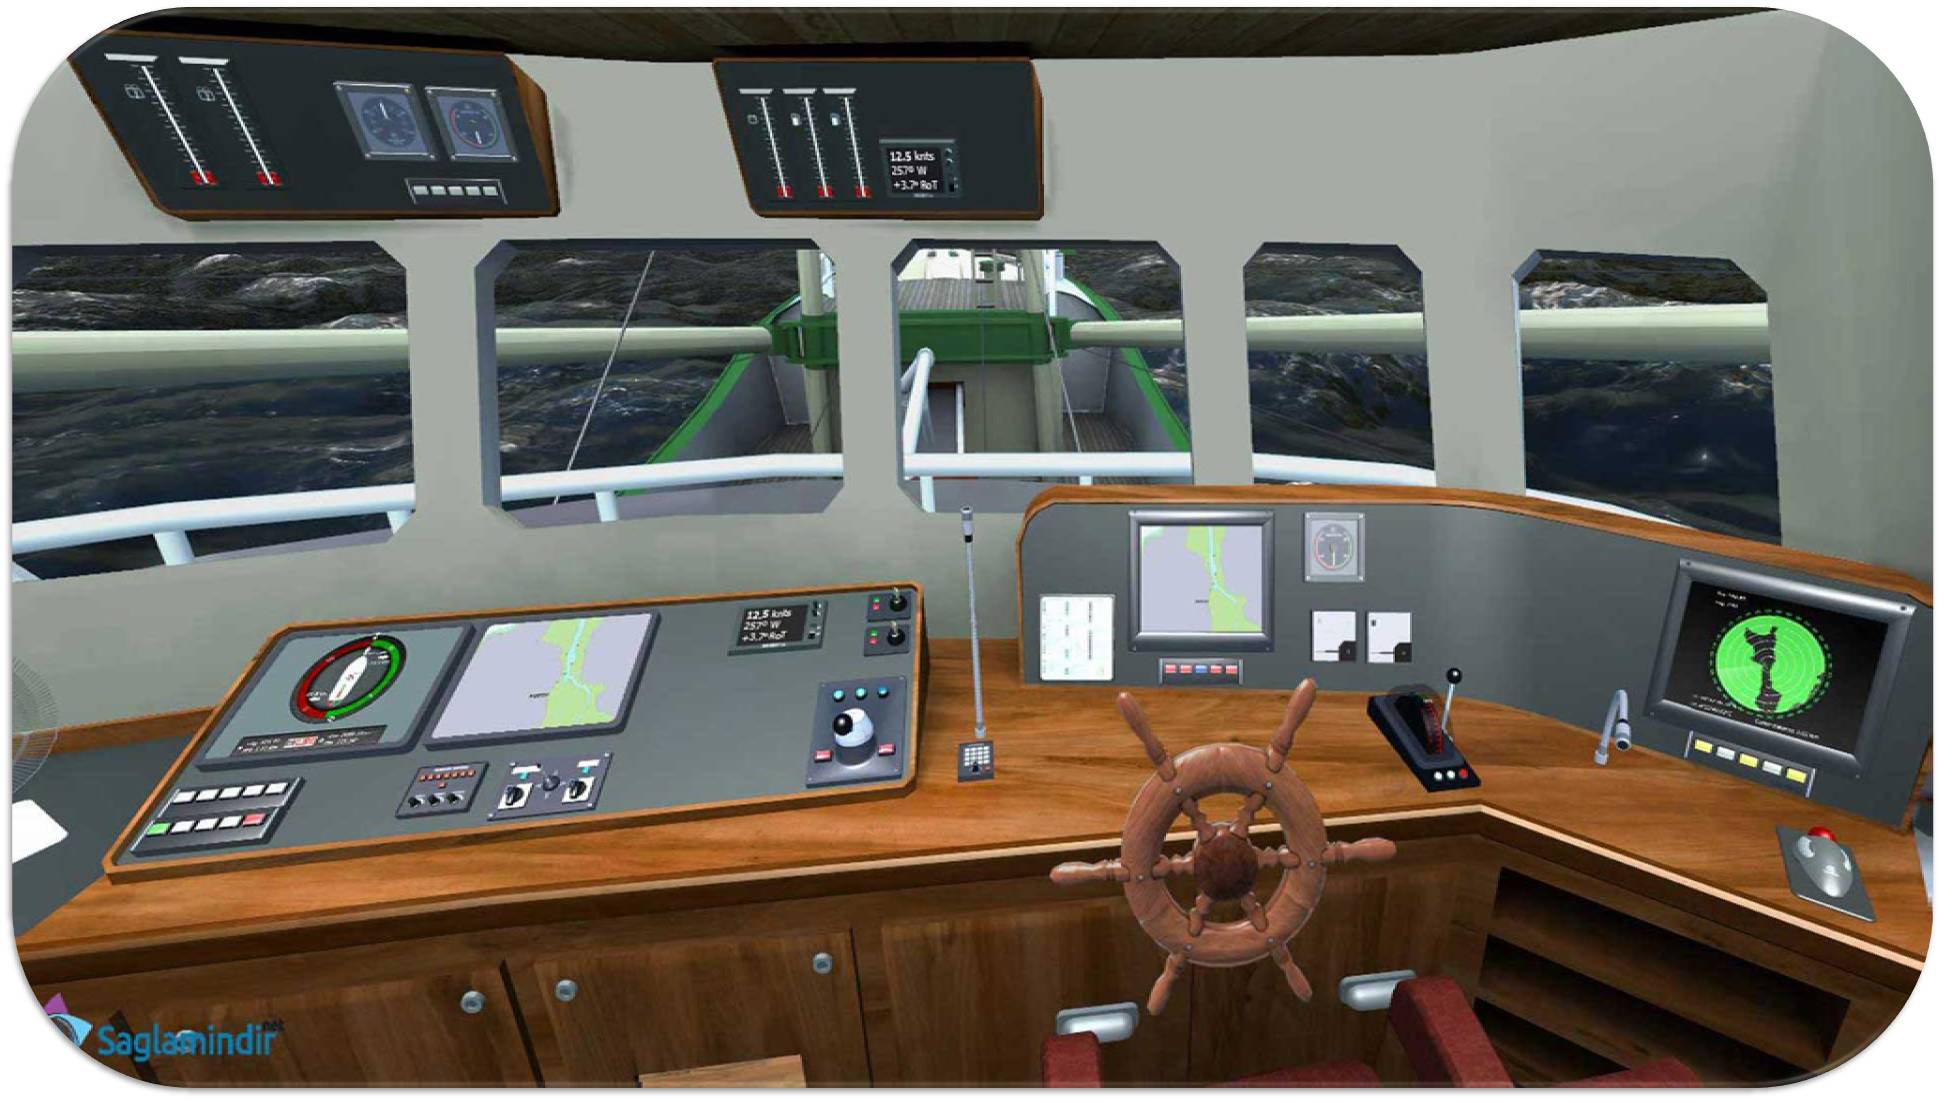 Ship Simulator Extremes saglamindir